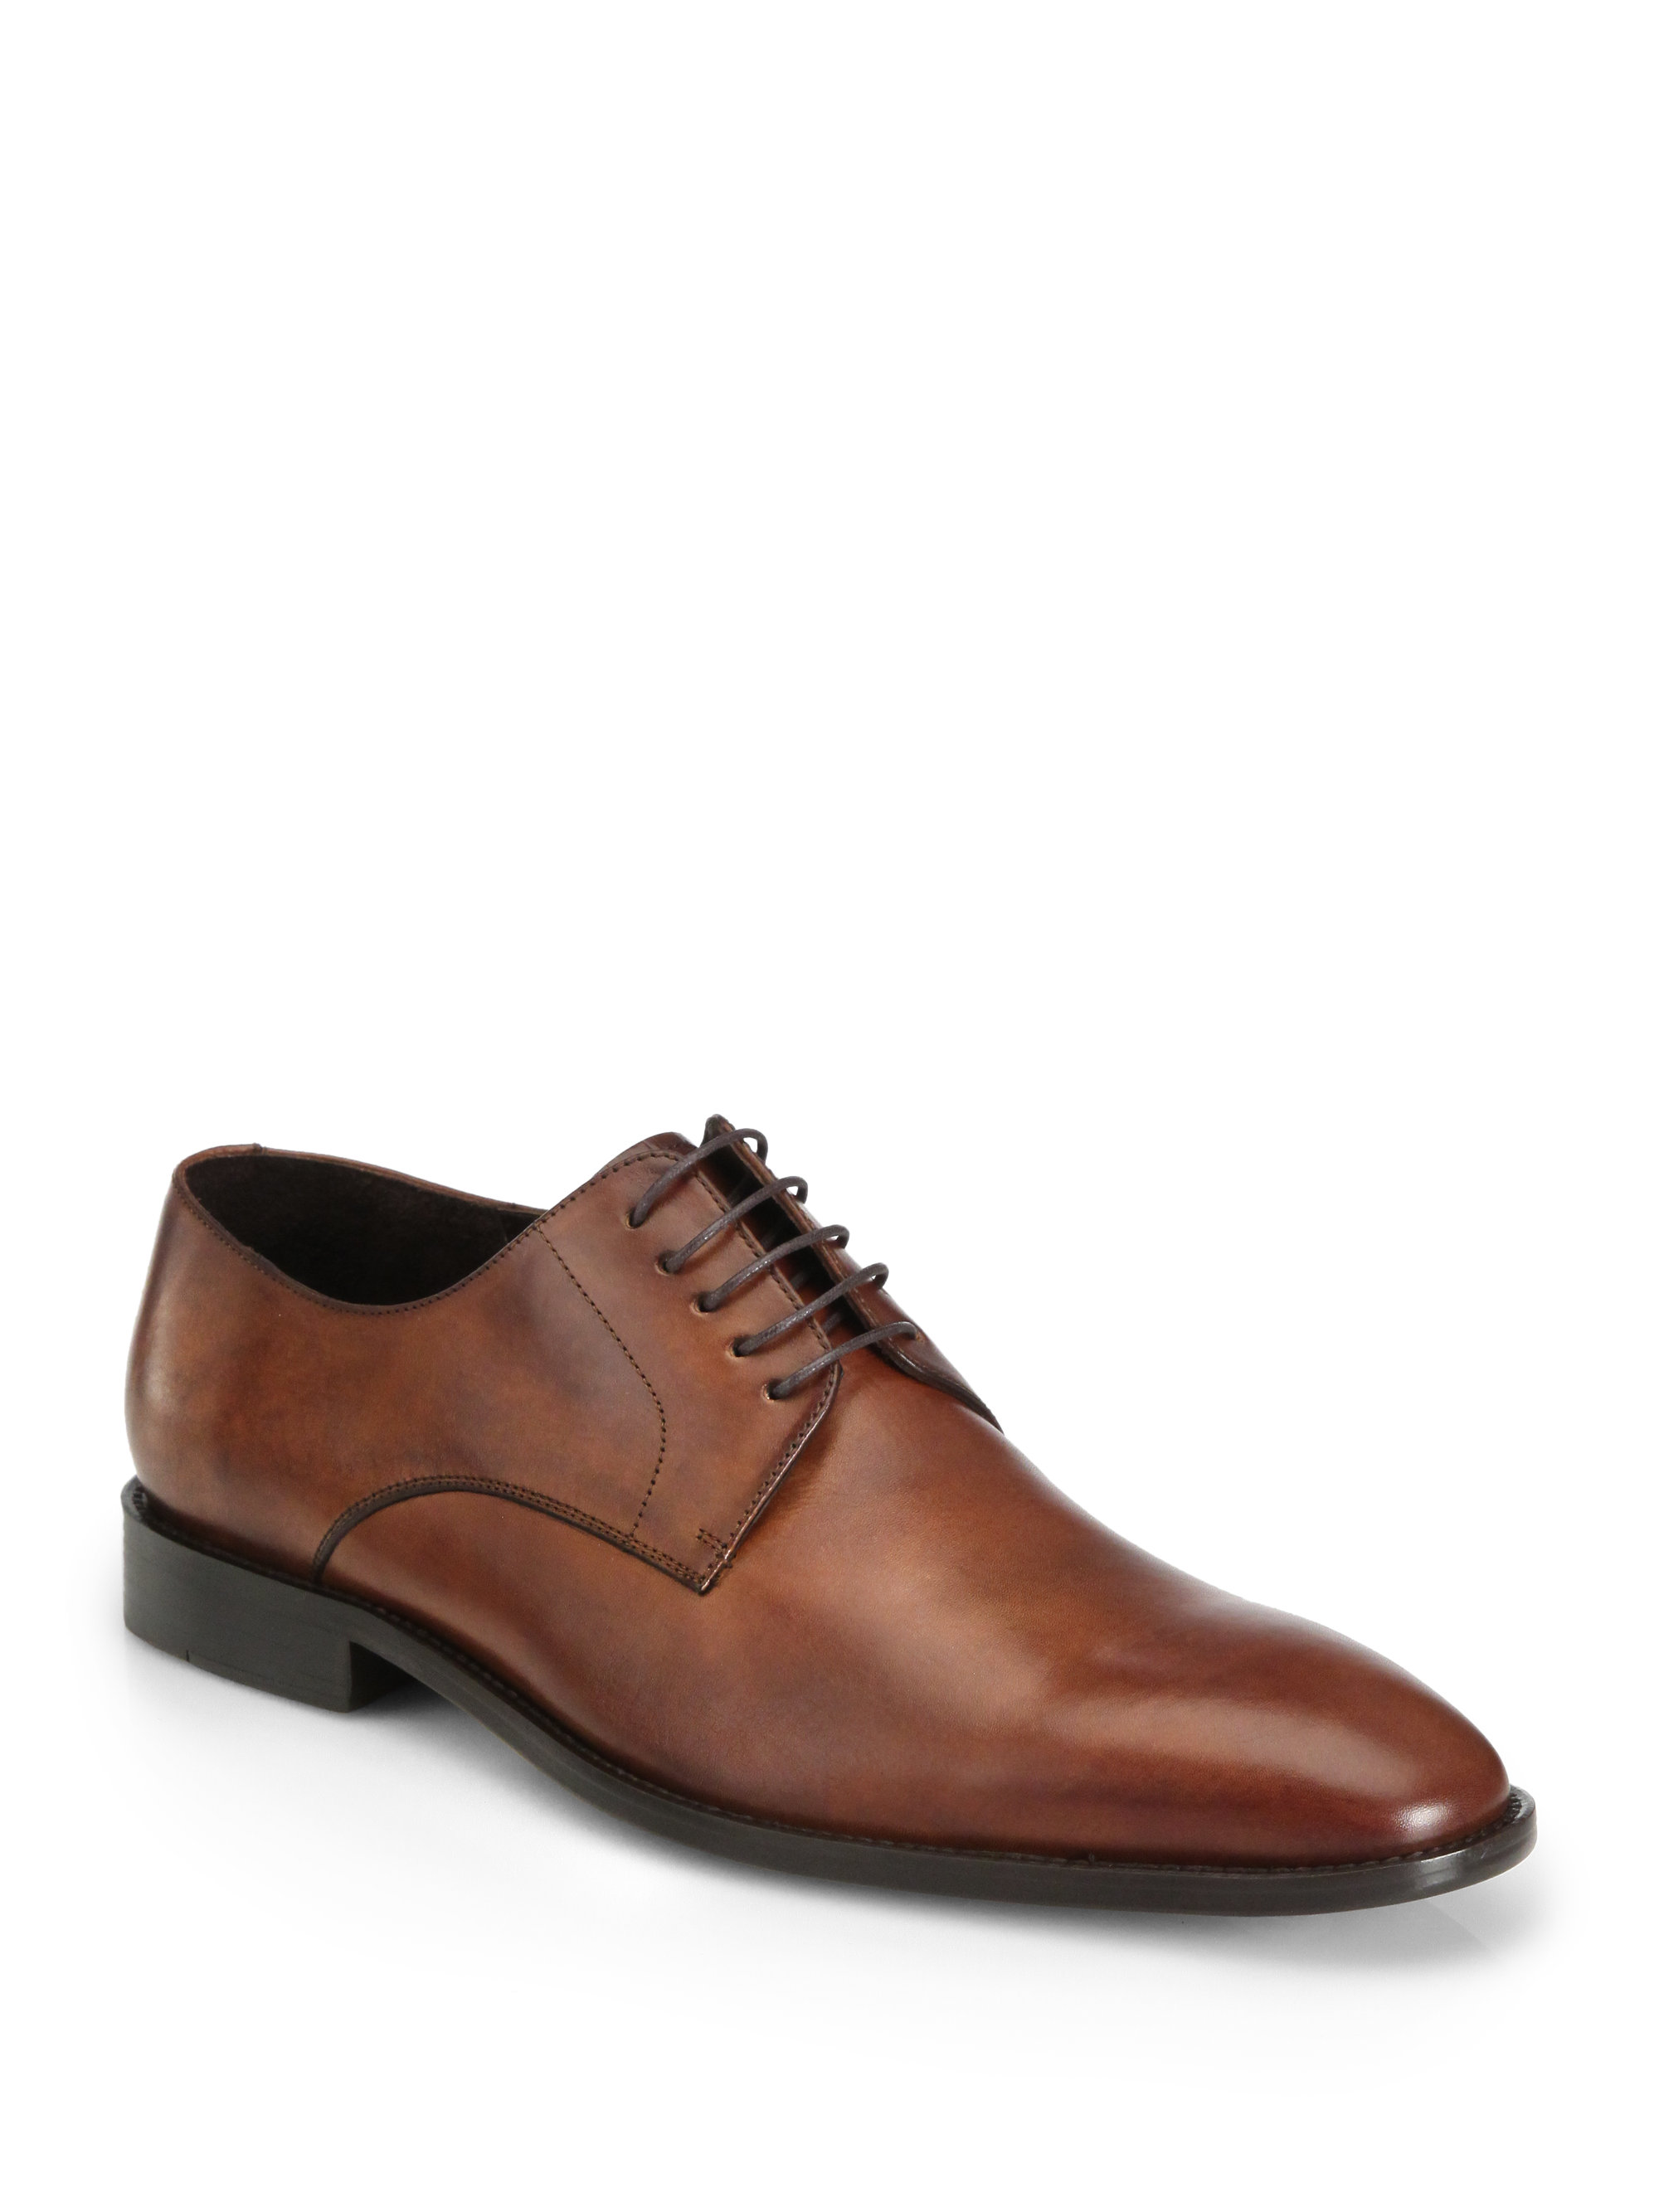 Lyst - Gordon Rush Bradley Oxford Dress Shoes cognac in Brown for Men